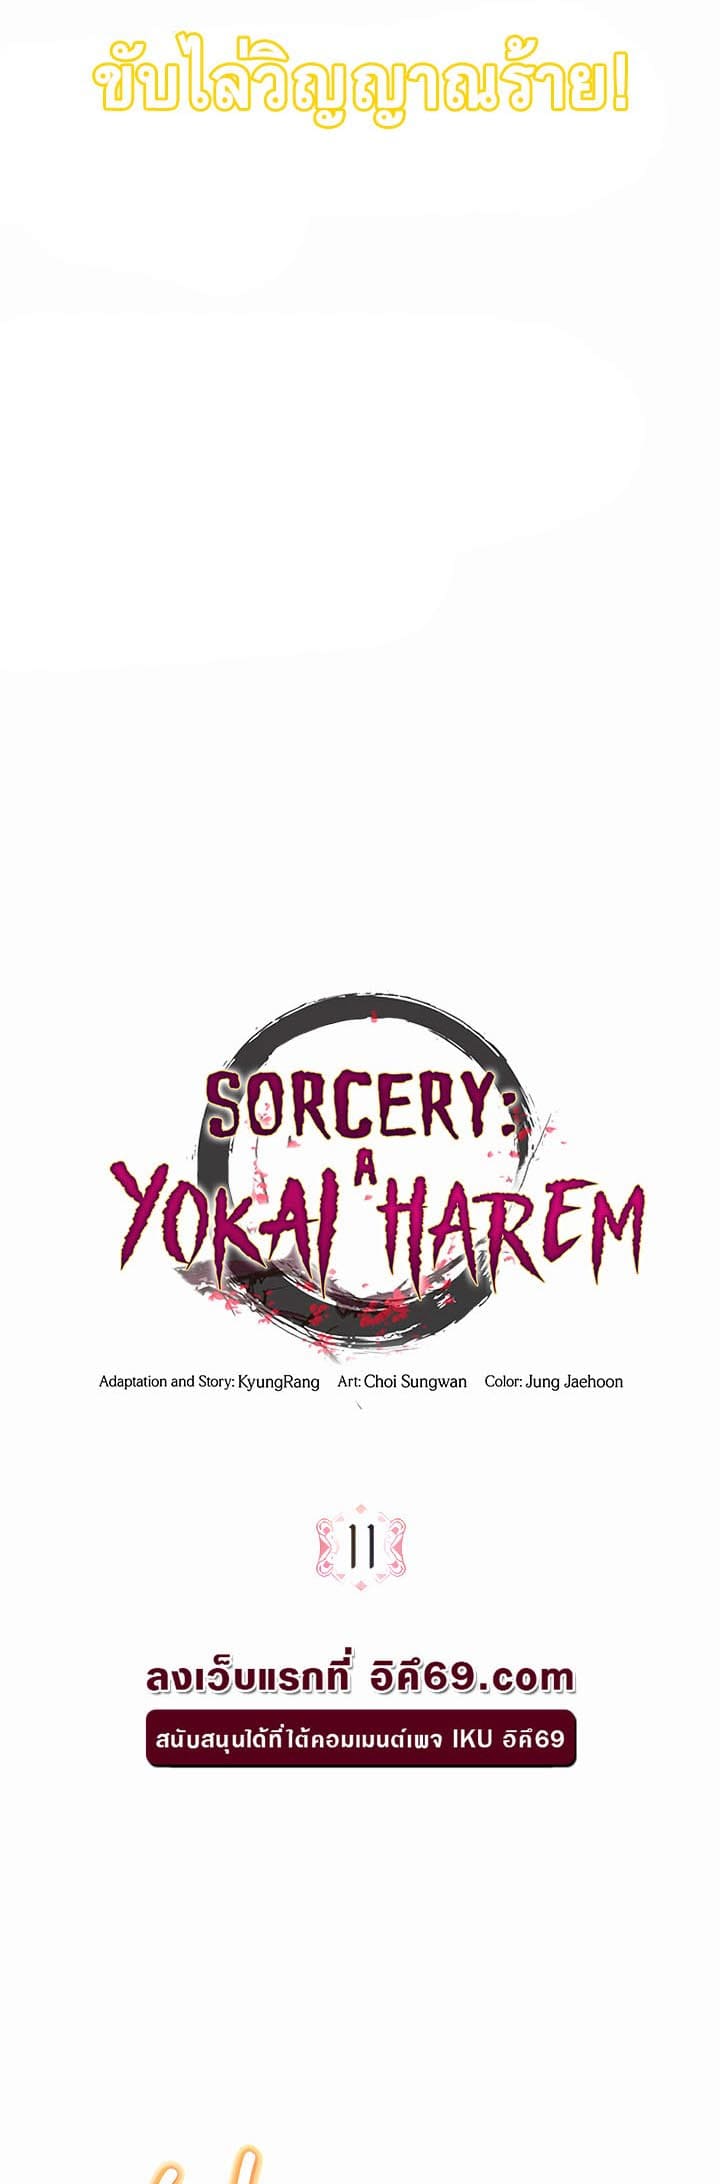 Sorcery: A Yokai Harem ตอนที่ 11 ภาพ 2